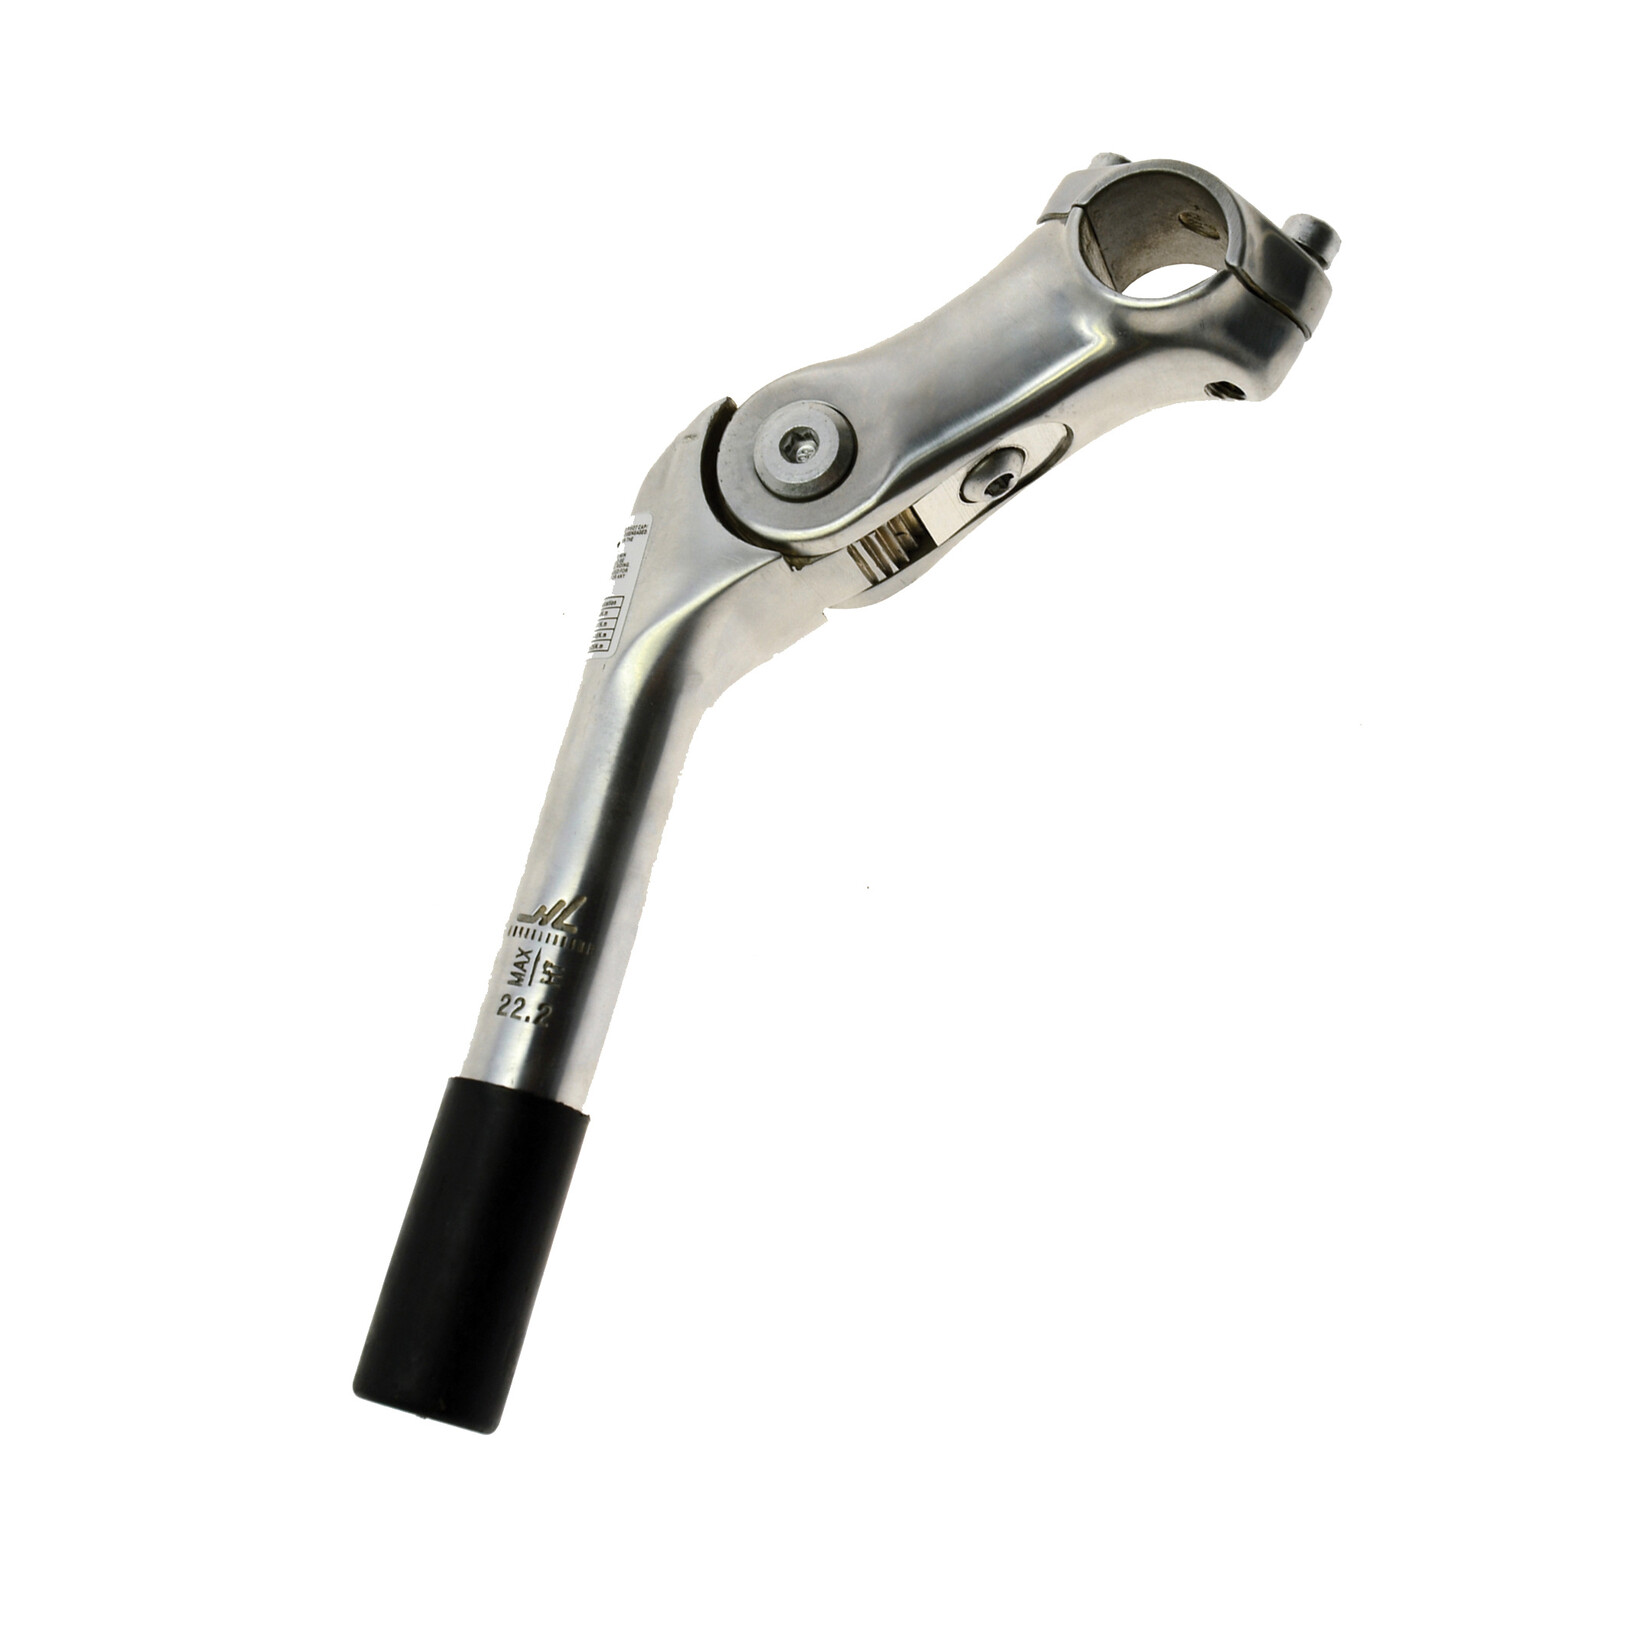 49N 49N Adjustable Quill Stem, 1-1/8"/25.4mm Steerer, 25.4mm Clamp